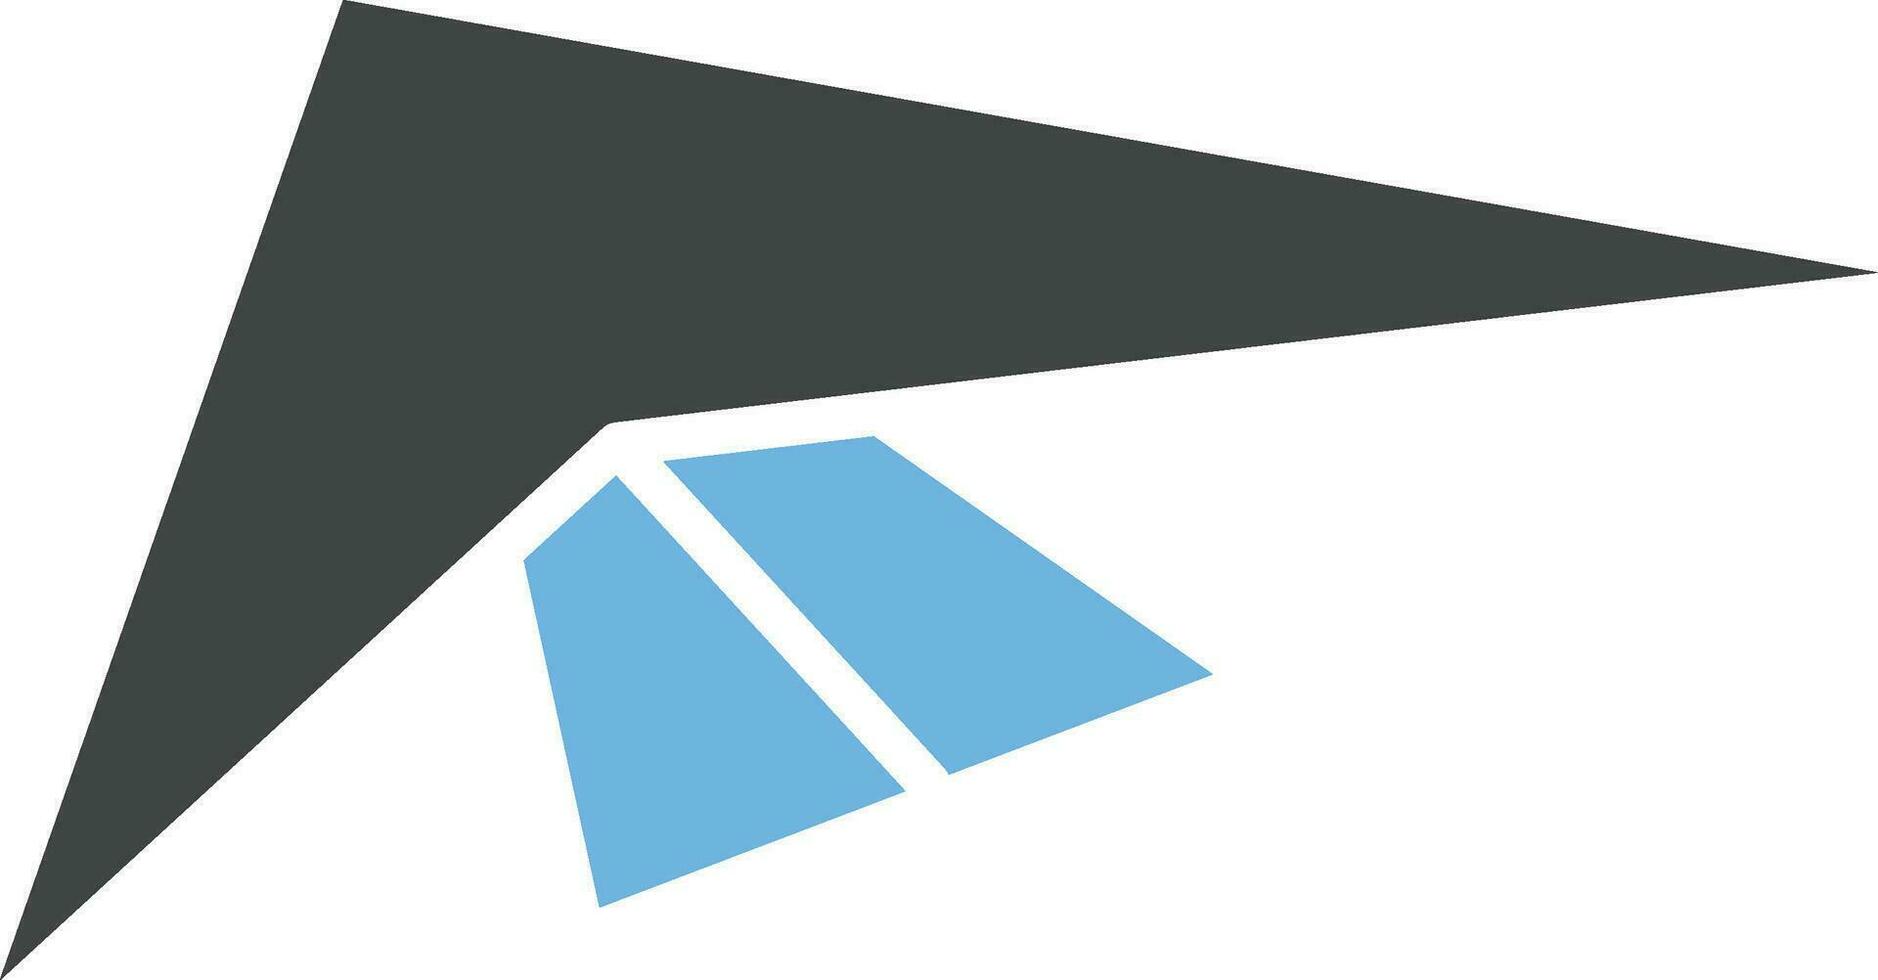 Hang Glider icon vector image.